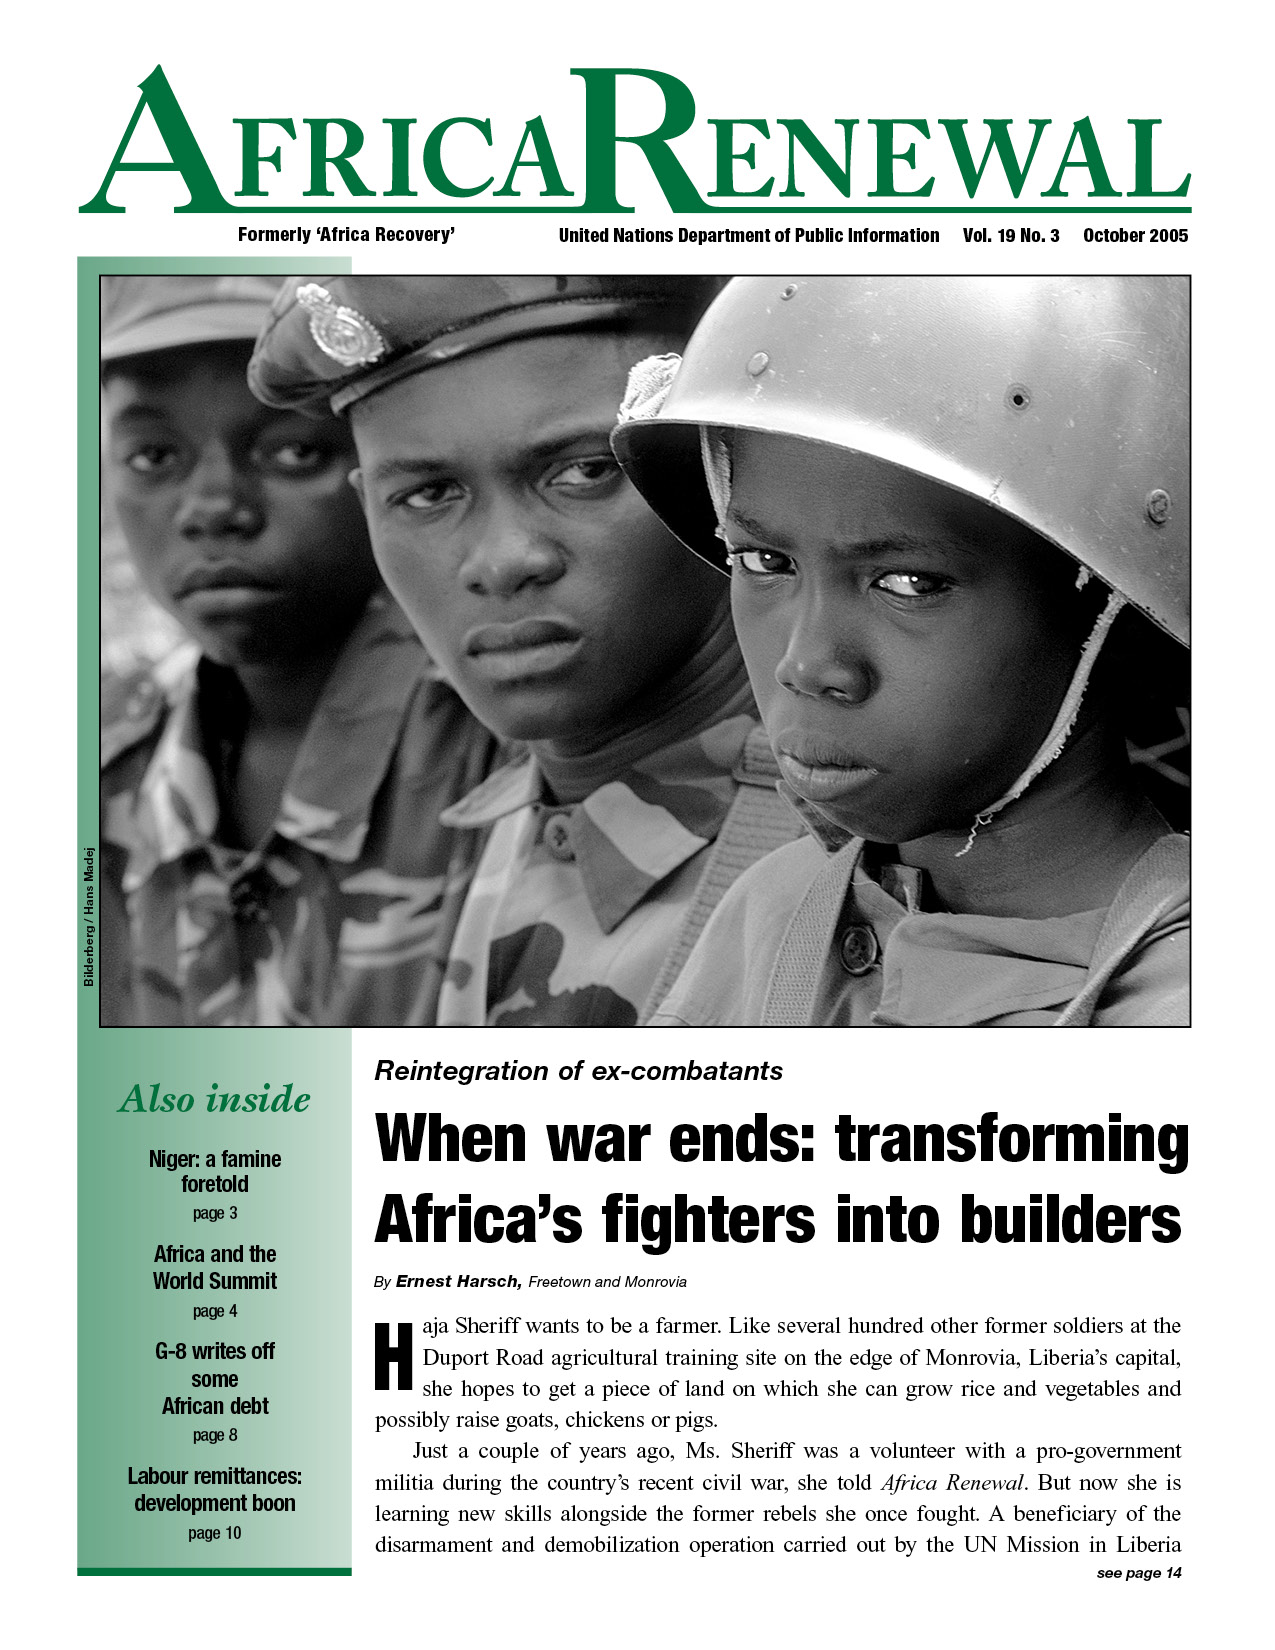 Africa Renewal Magazine October 2005